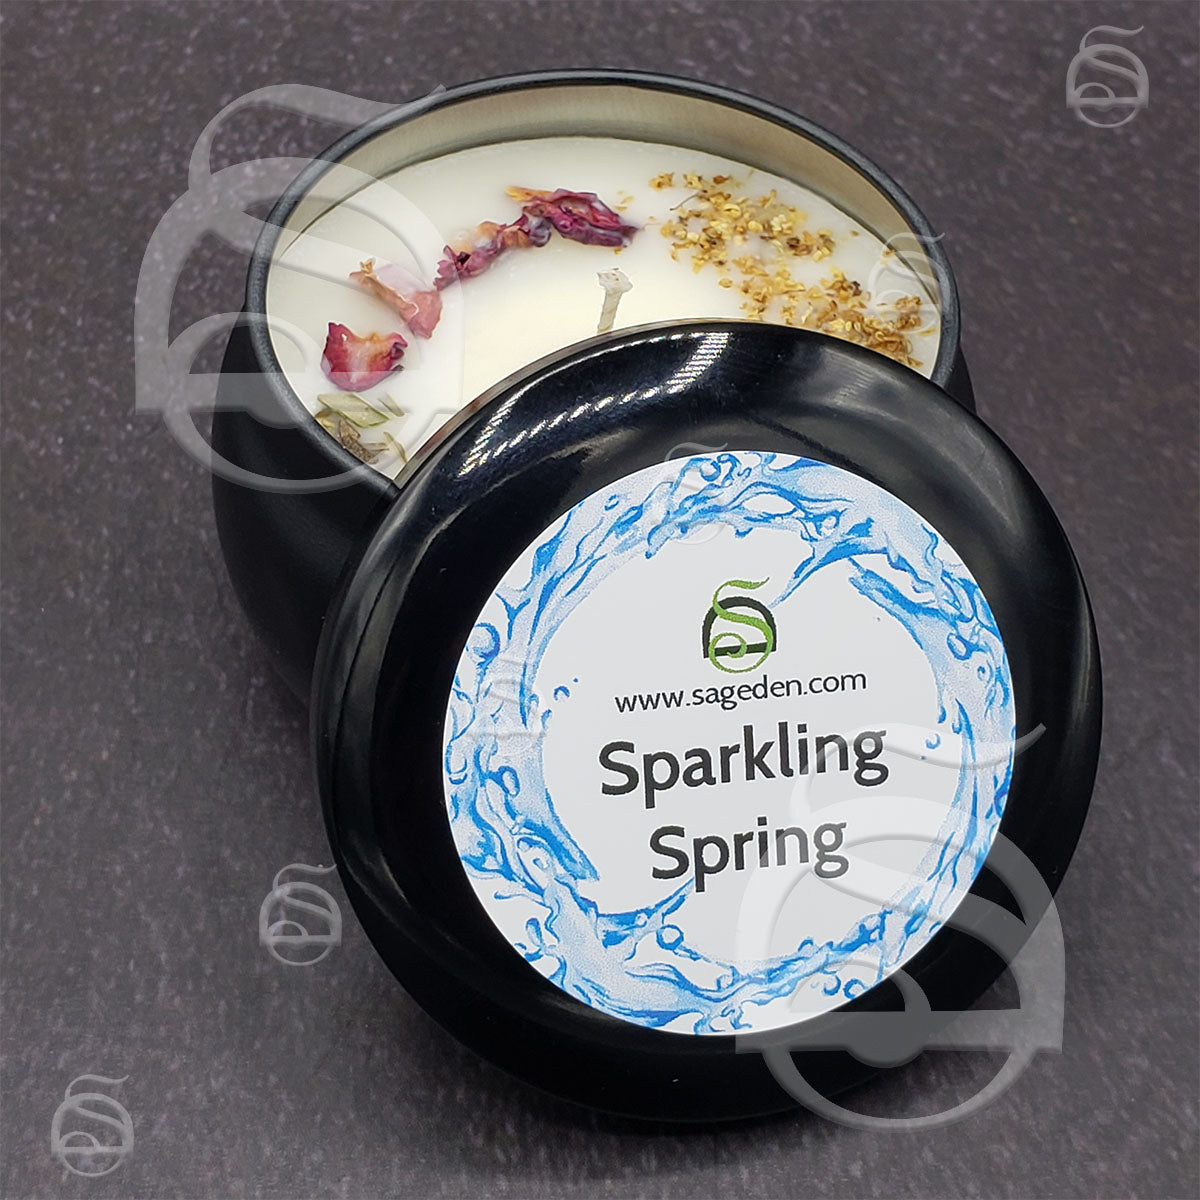 Sparkling Spring Candle & Wax Melt (Sage Den Product)